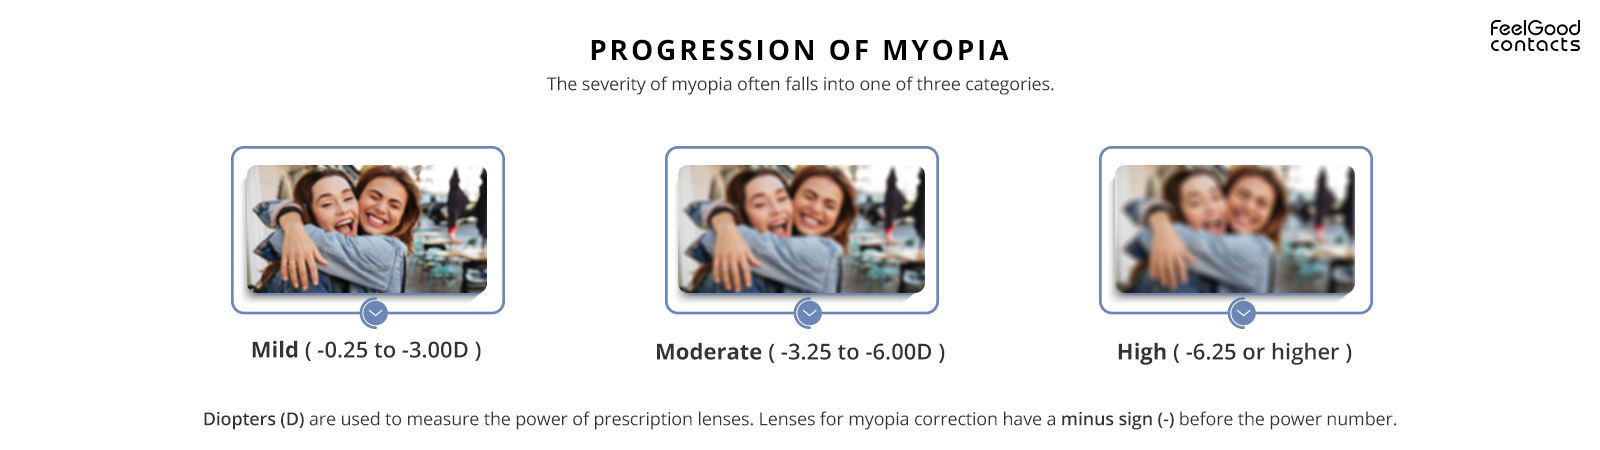 progression of myopia.jpg